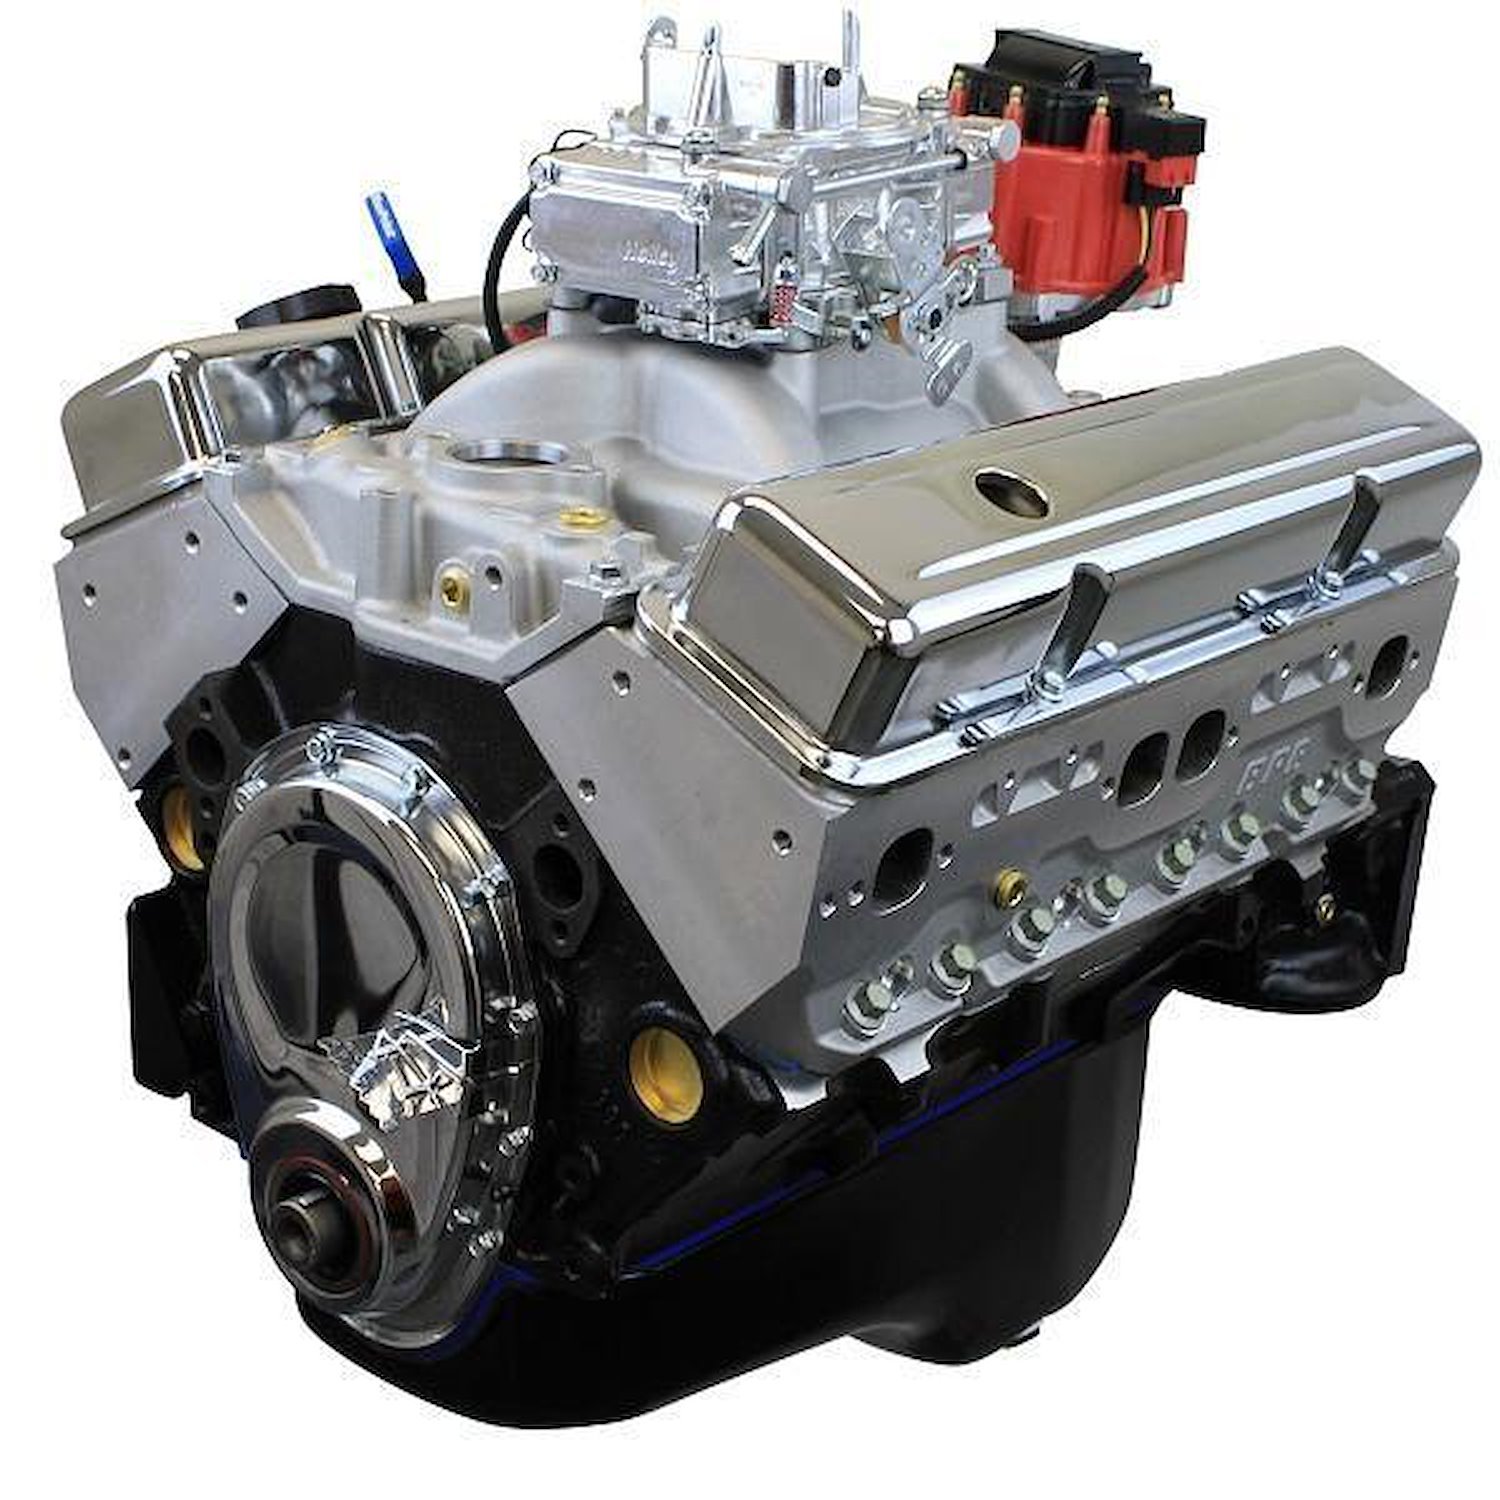 New Block Casting 350 ci Cruiser Crate Engine